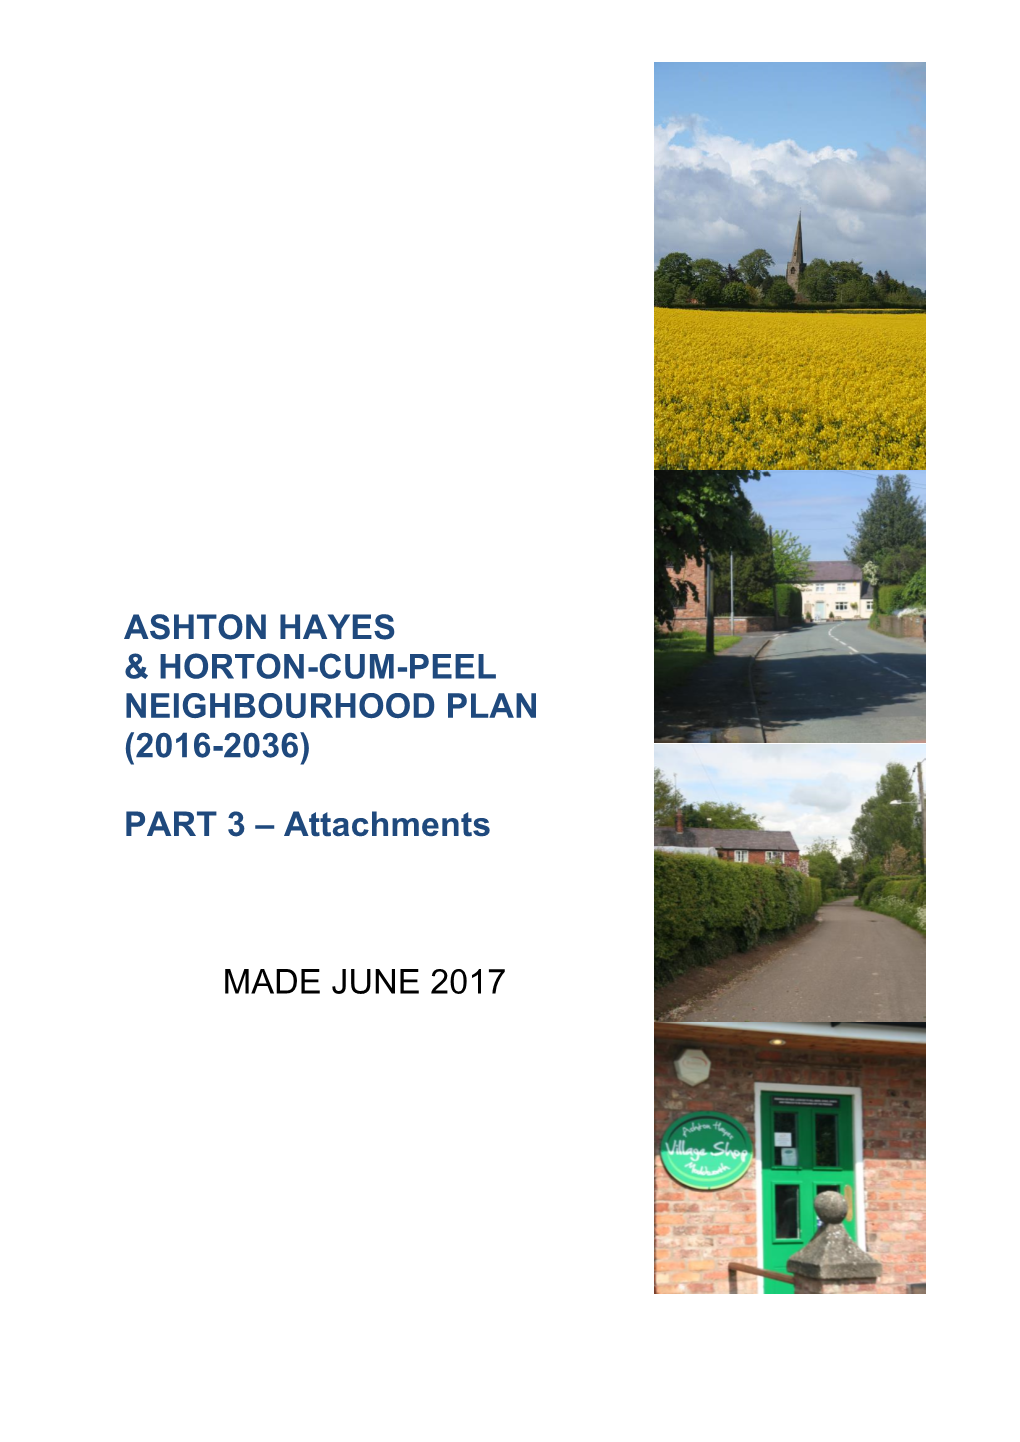 Ashton Hayes & Horton-Cum-Peel Neighbourhood Plan Part 3